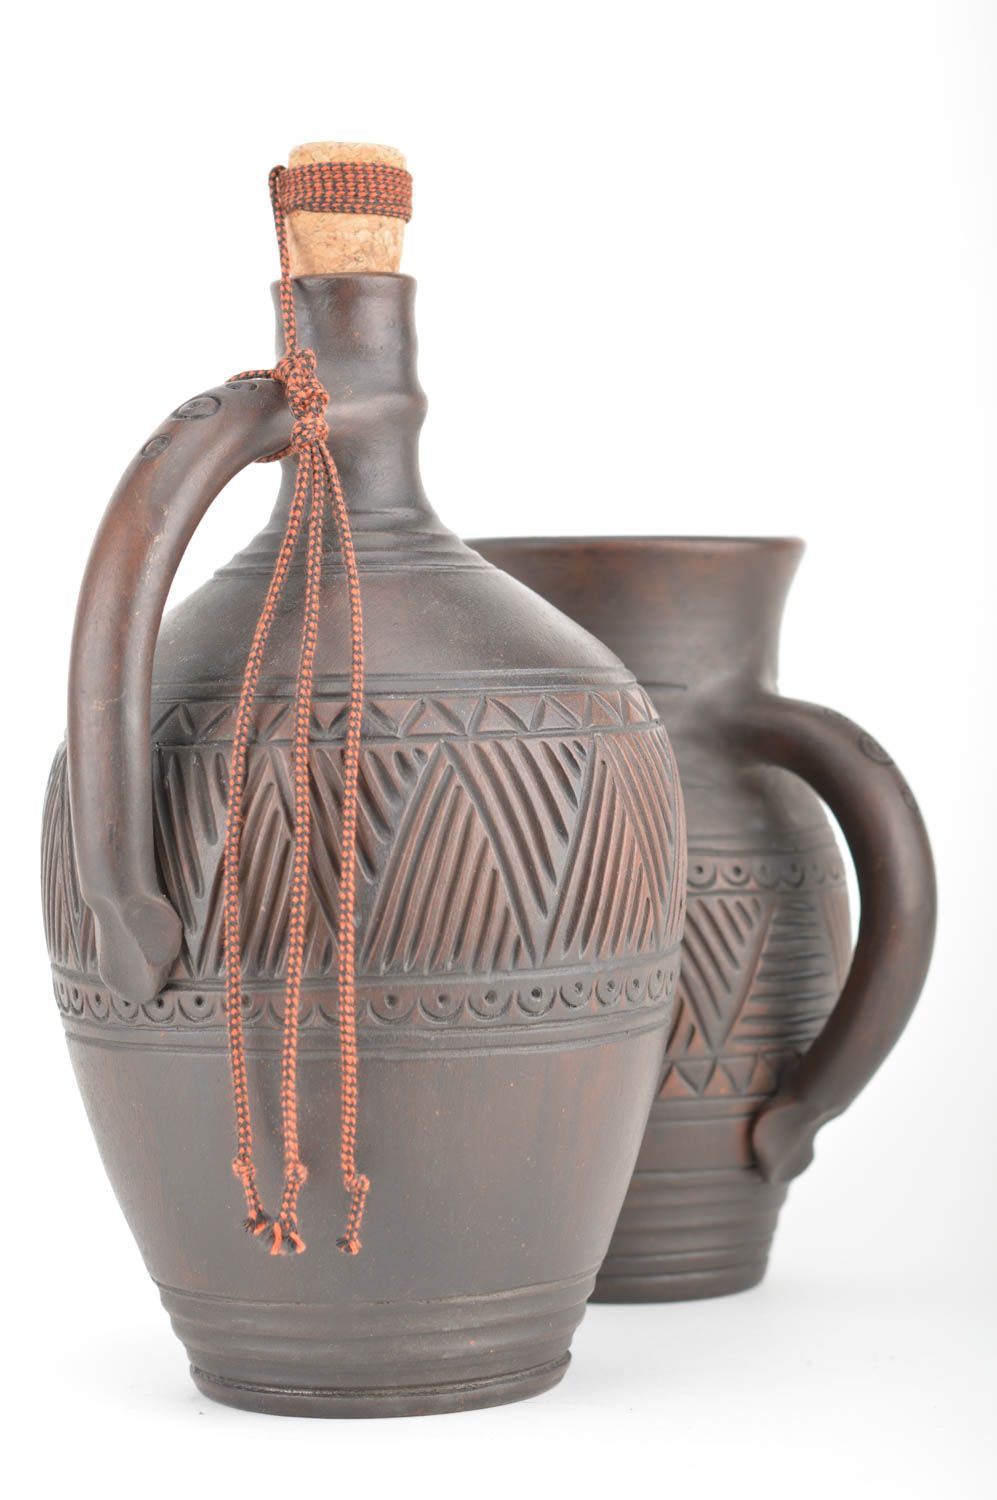 30 oz and 60 oz ceramic wine carafe and jug in dark brown color 5,31 lb  photo 5